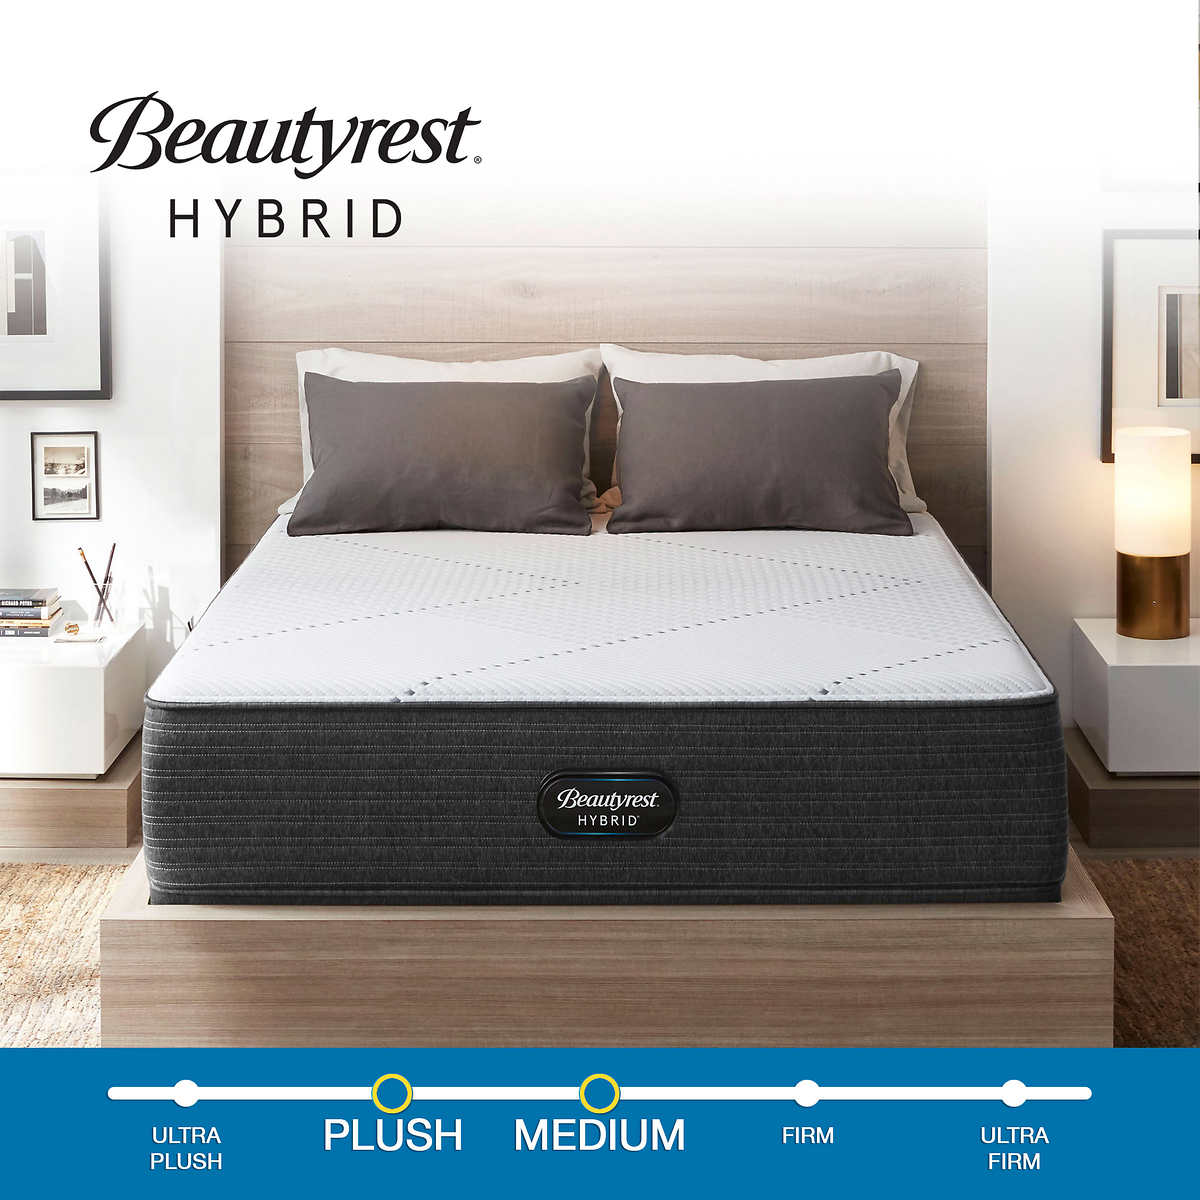 Beautyrest 13 5 Hybrid 1000 Infinicool, Beautyrest Premium Bed S Bed Frame